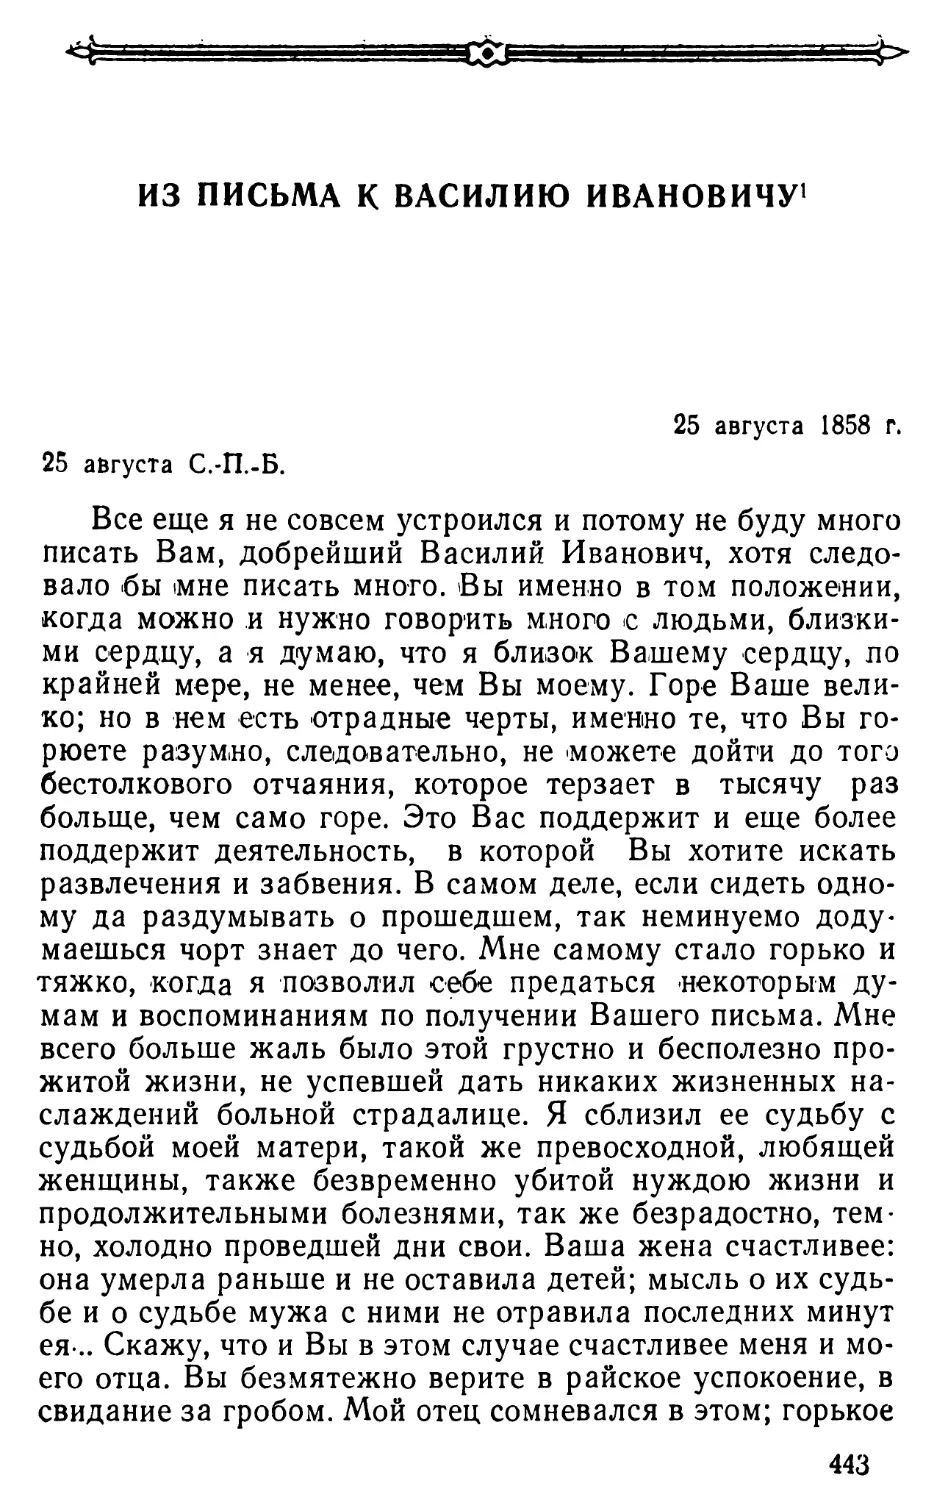 Из письма к Василию Ивановичу